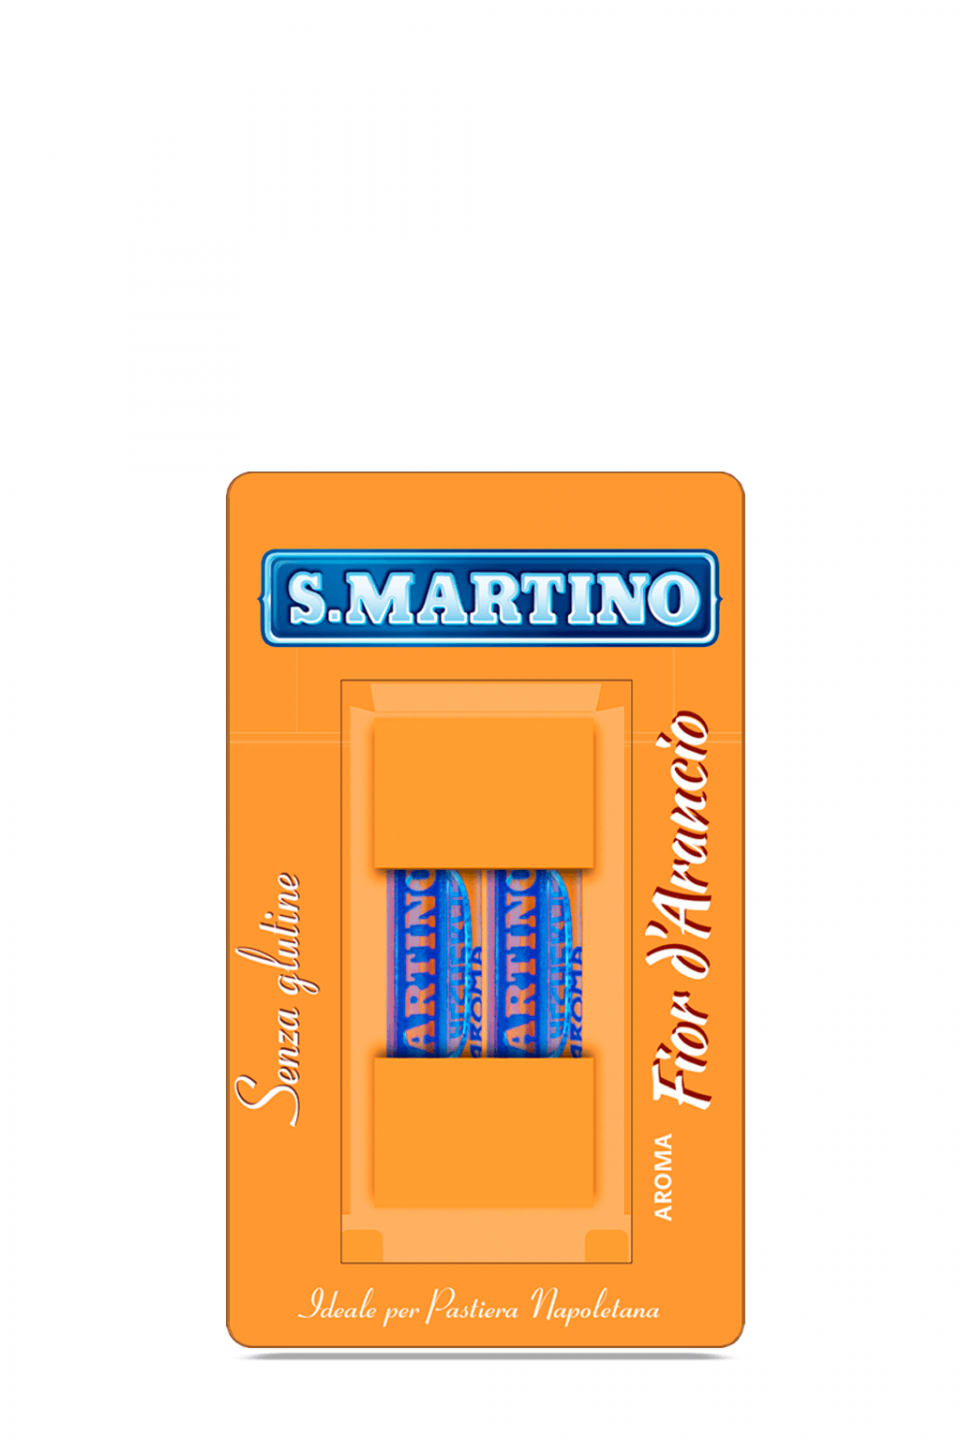 S.MARTINO Aroma Fior d'Arancio 4ml